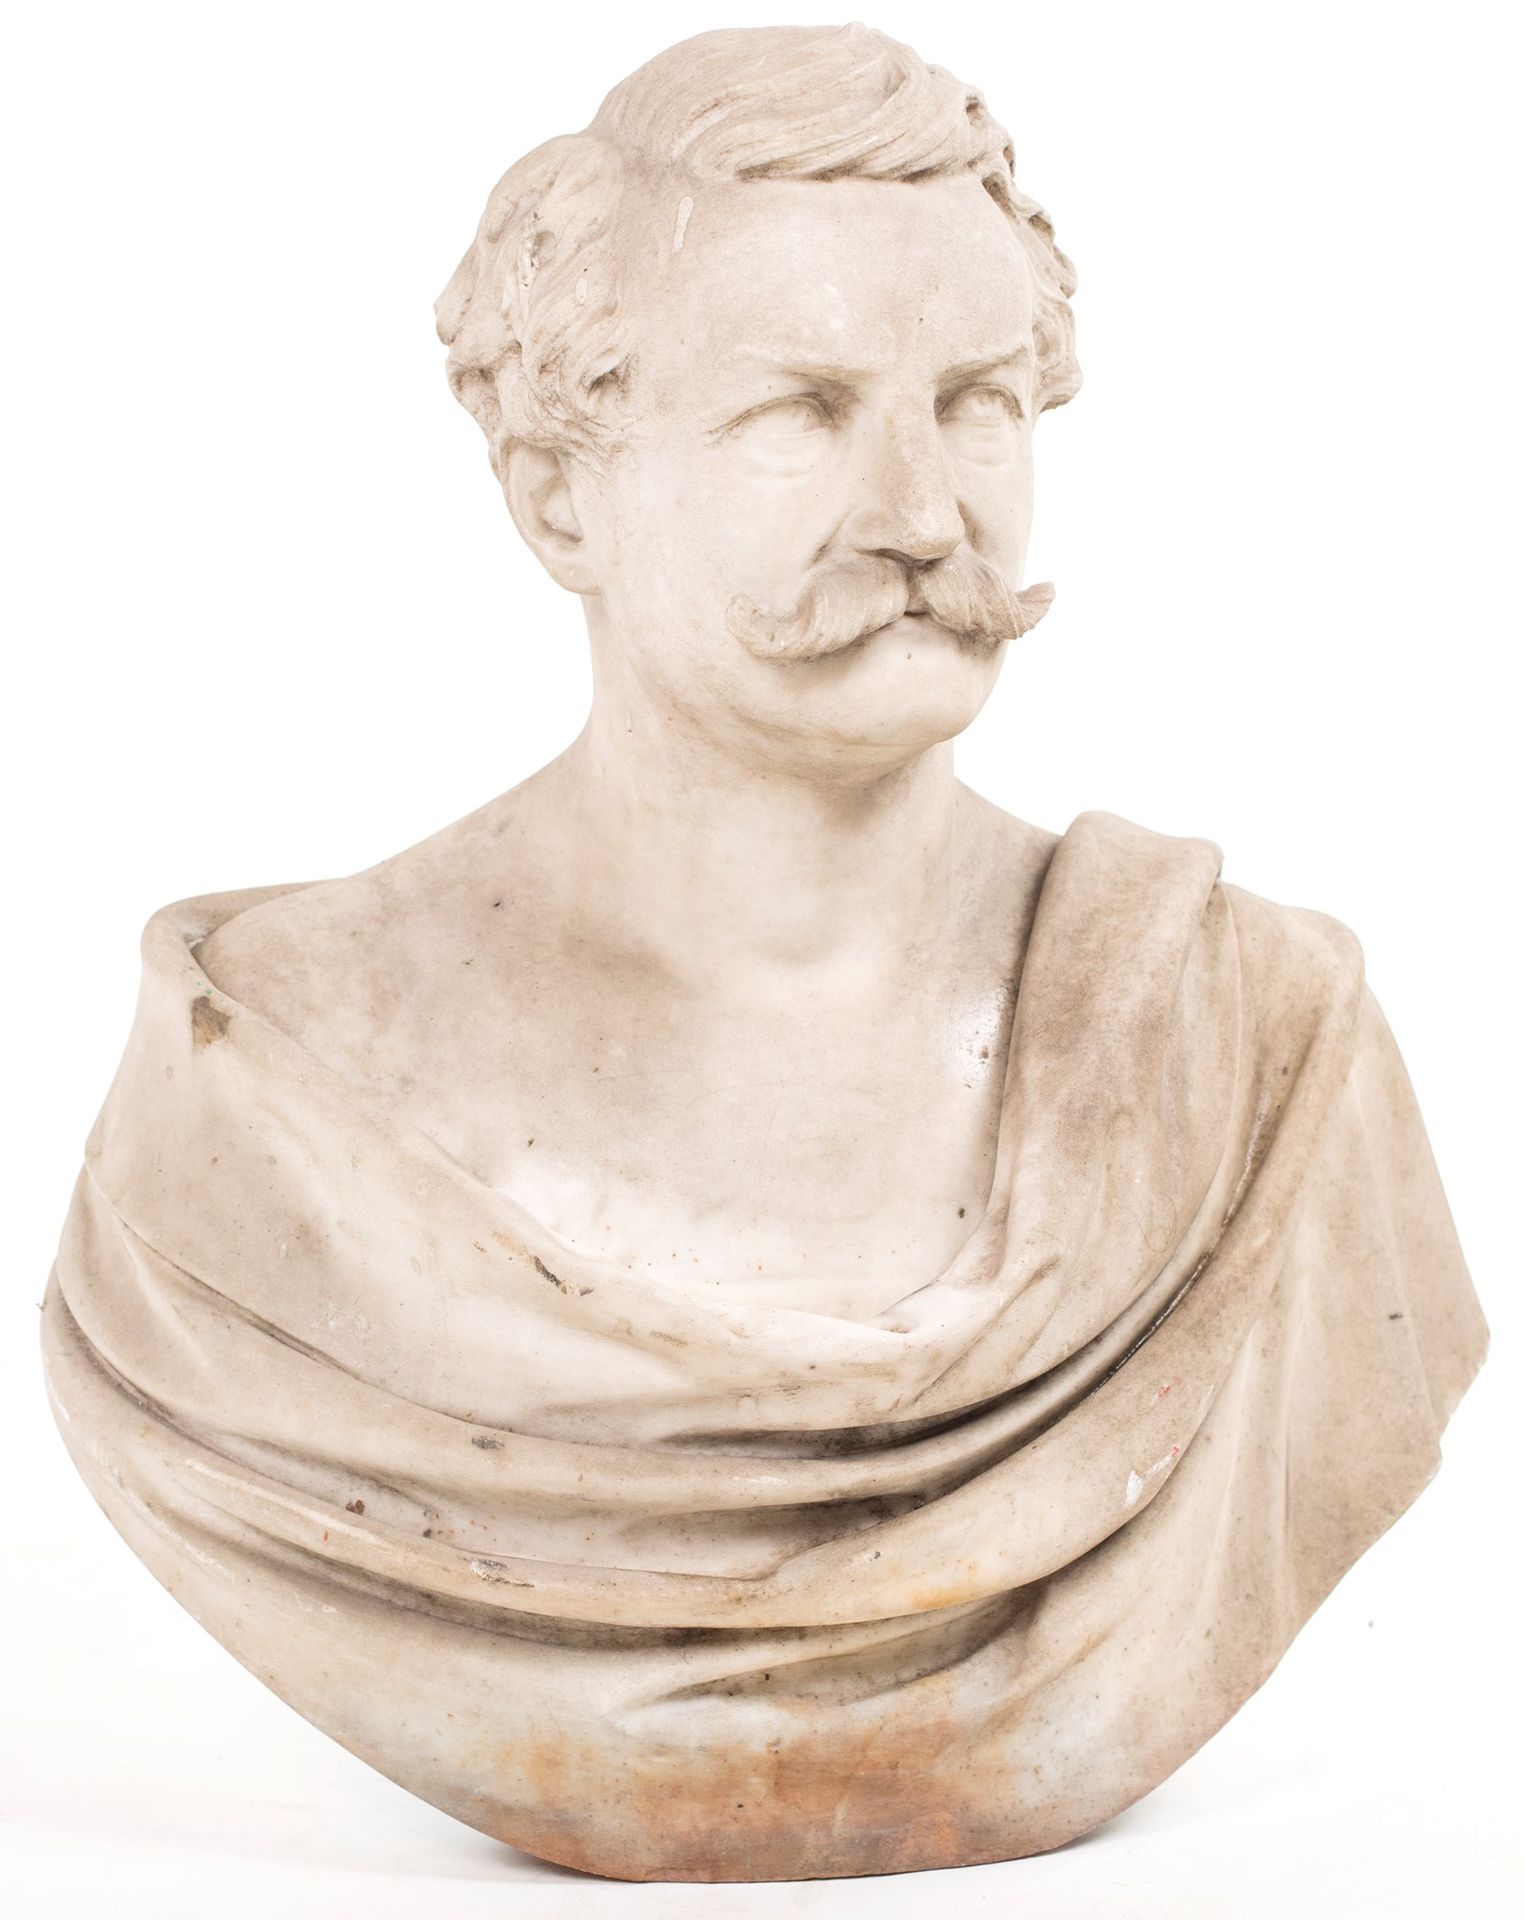 White marble bust, 19th century que representa a un caballero de toga con bigote